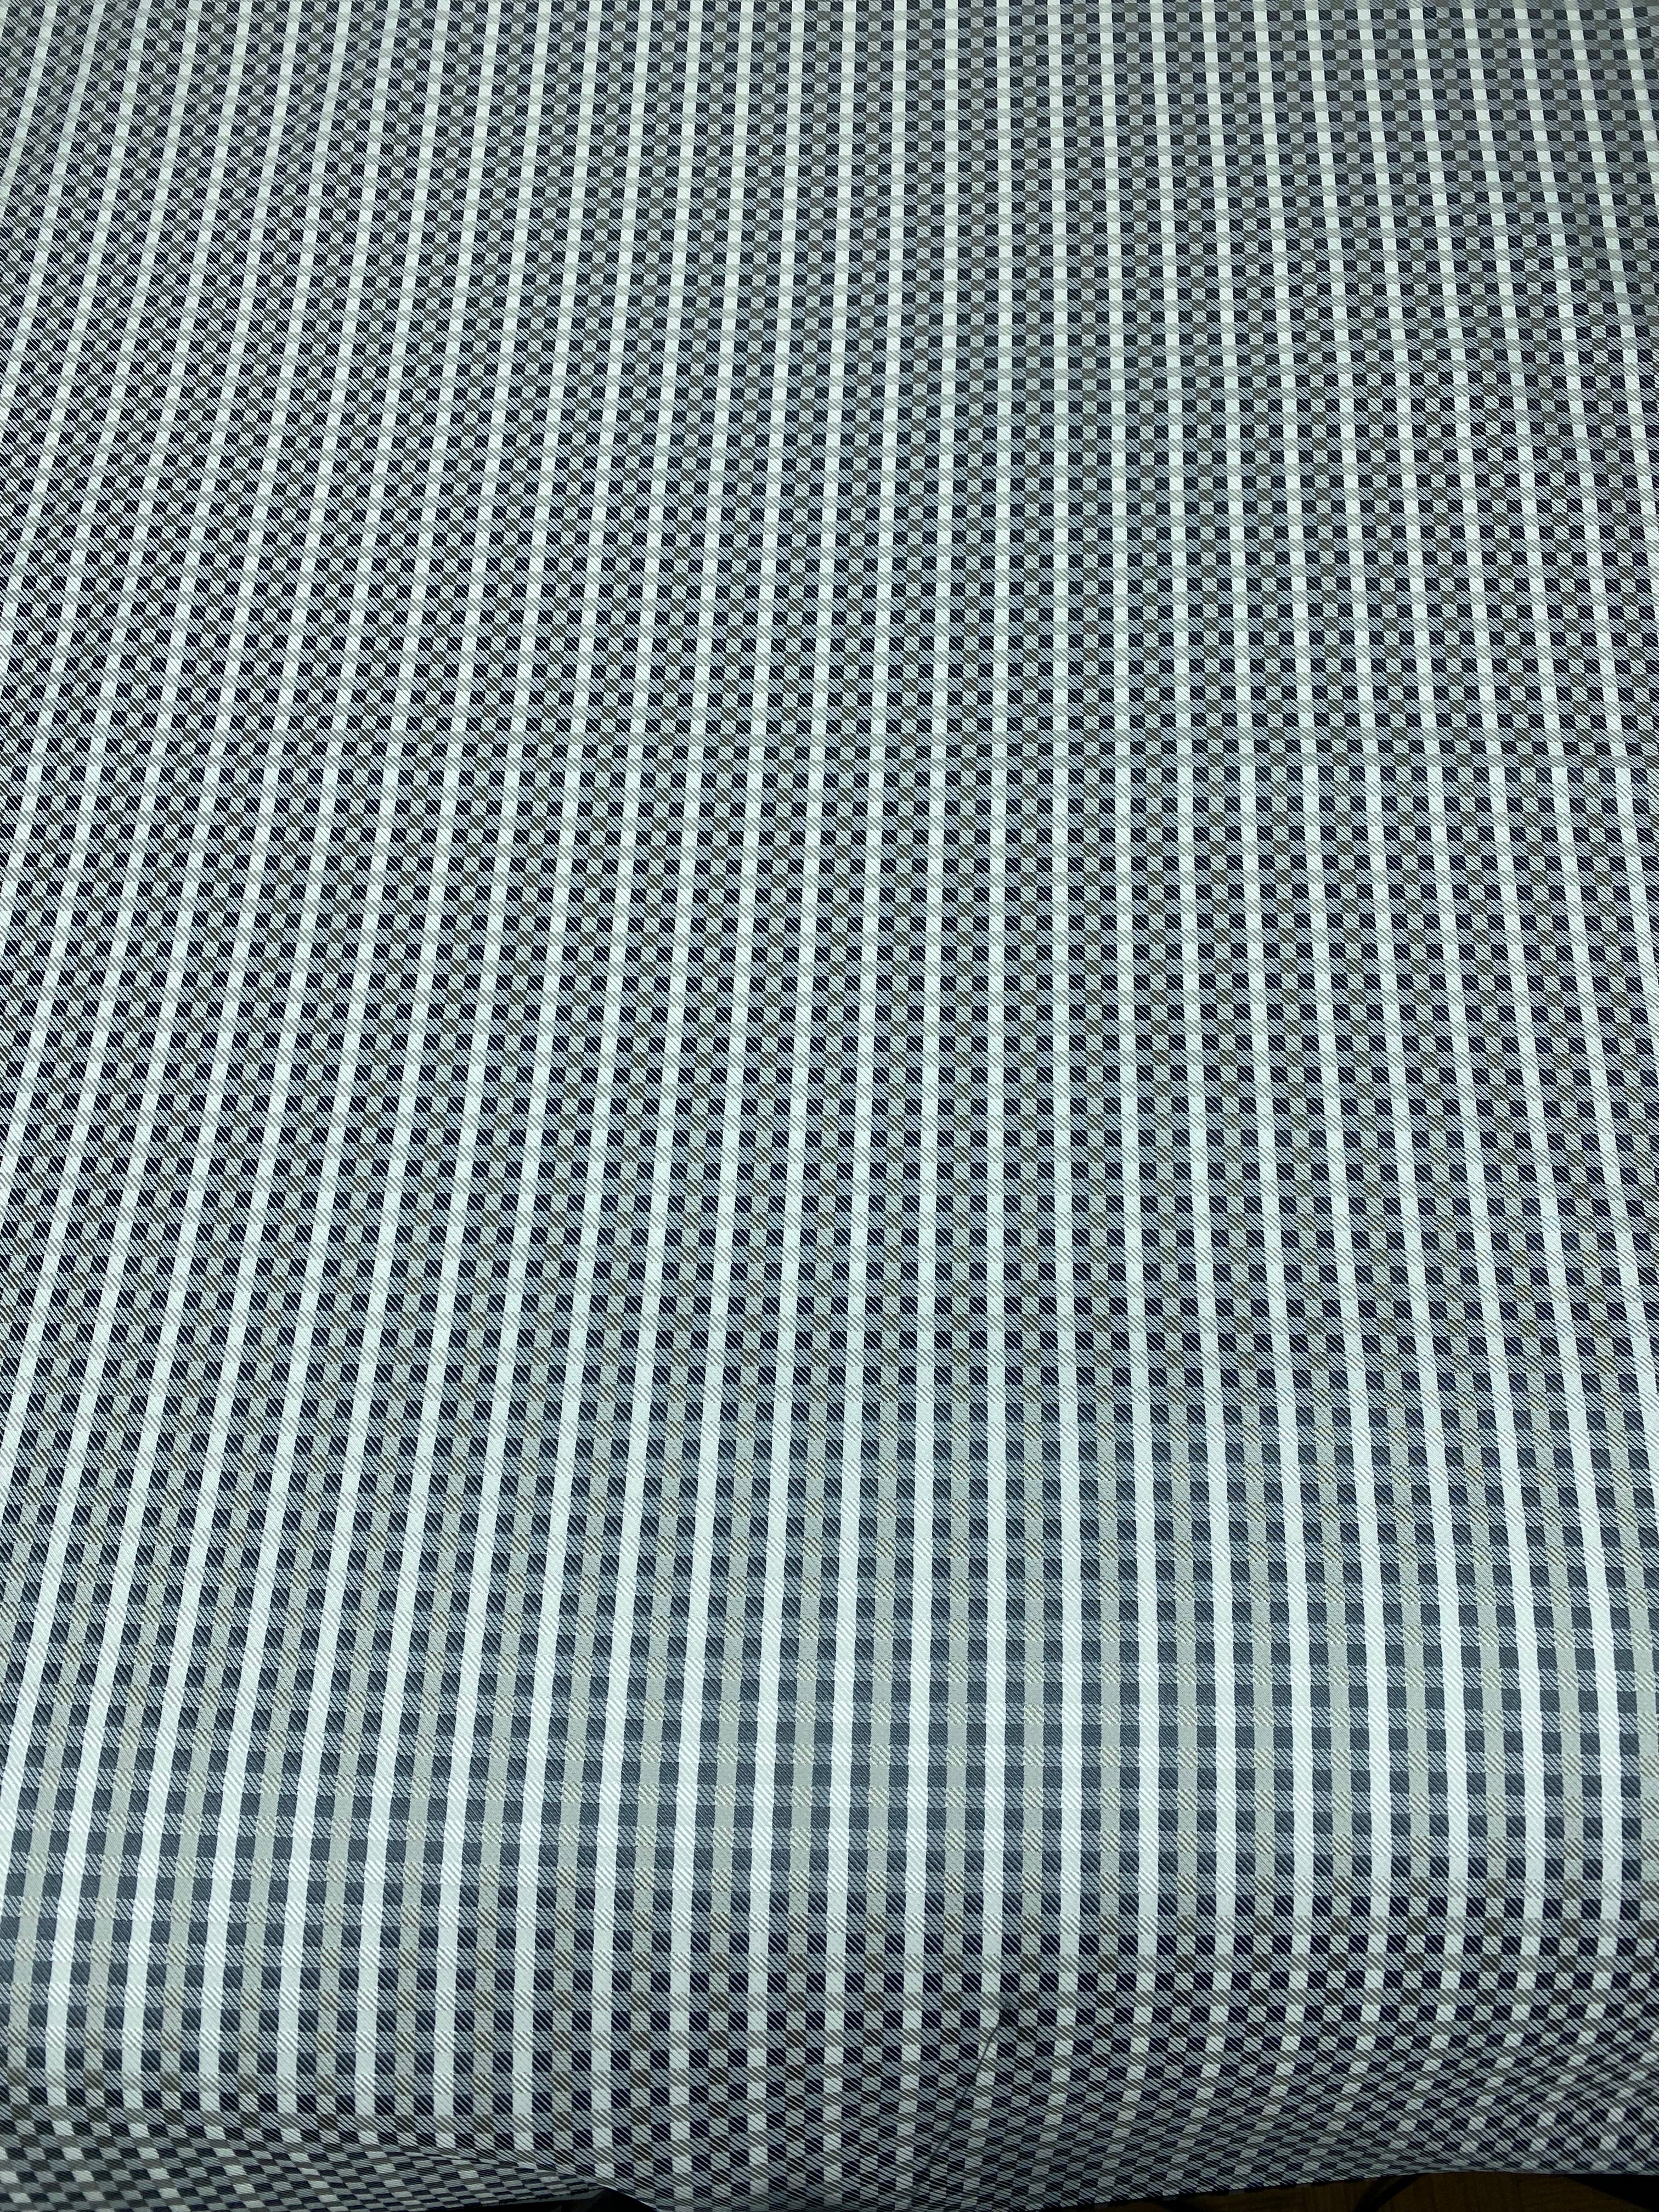 Plaid Silk/Polyester - Grey / White - Remnant